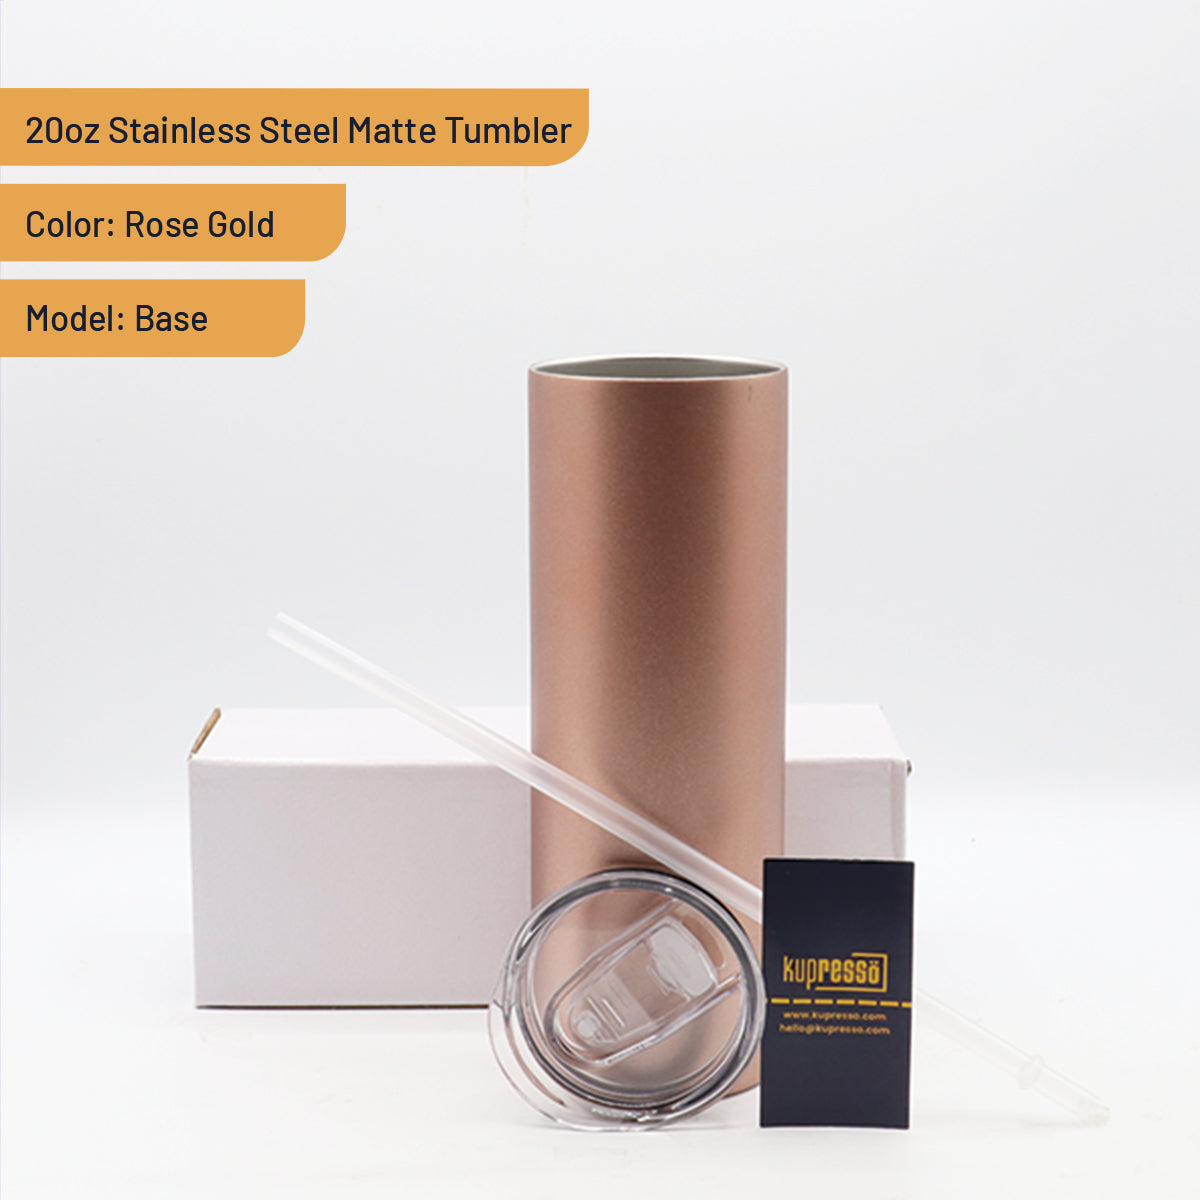 20oz Stainless Steel Matte Tumbler 20oz Stainless Steel Tumblers Kupresso Base (White Gift Box) Rose Gold 